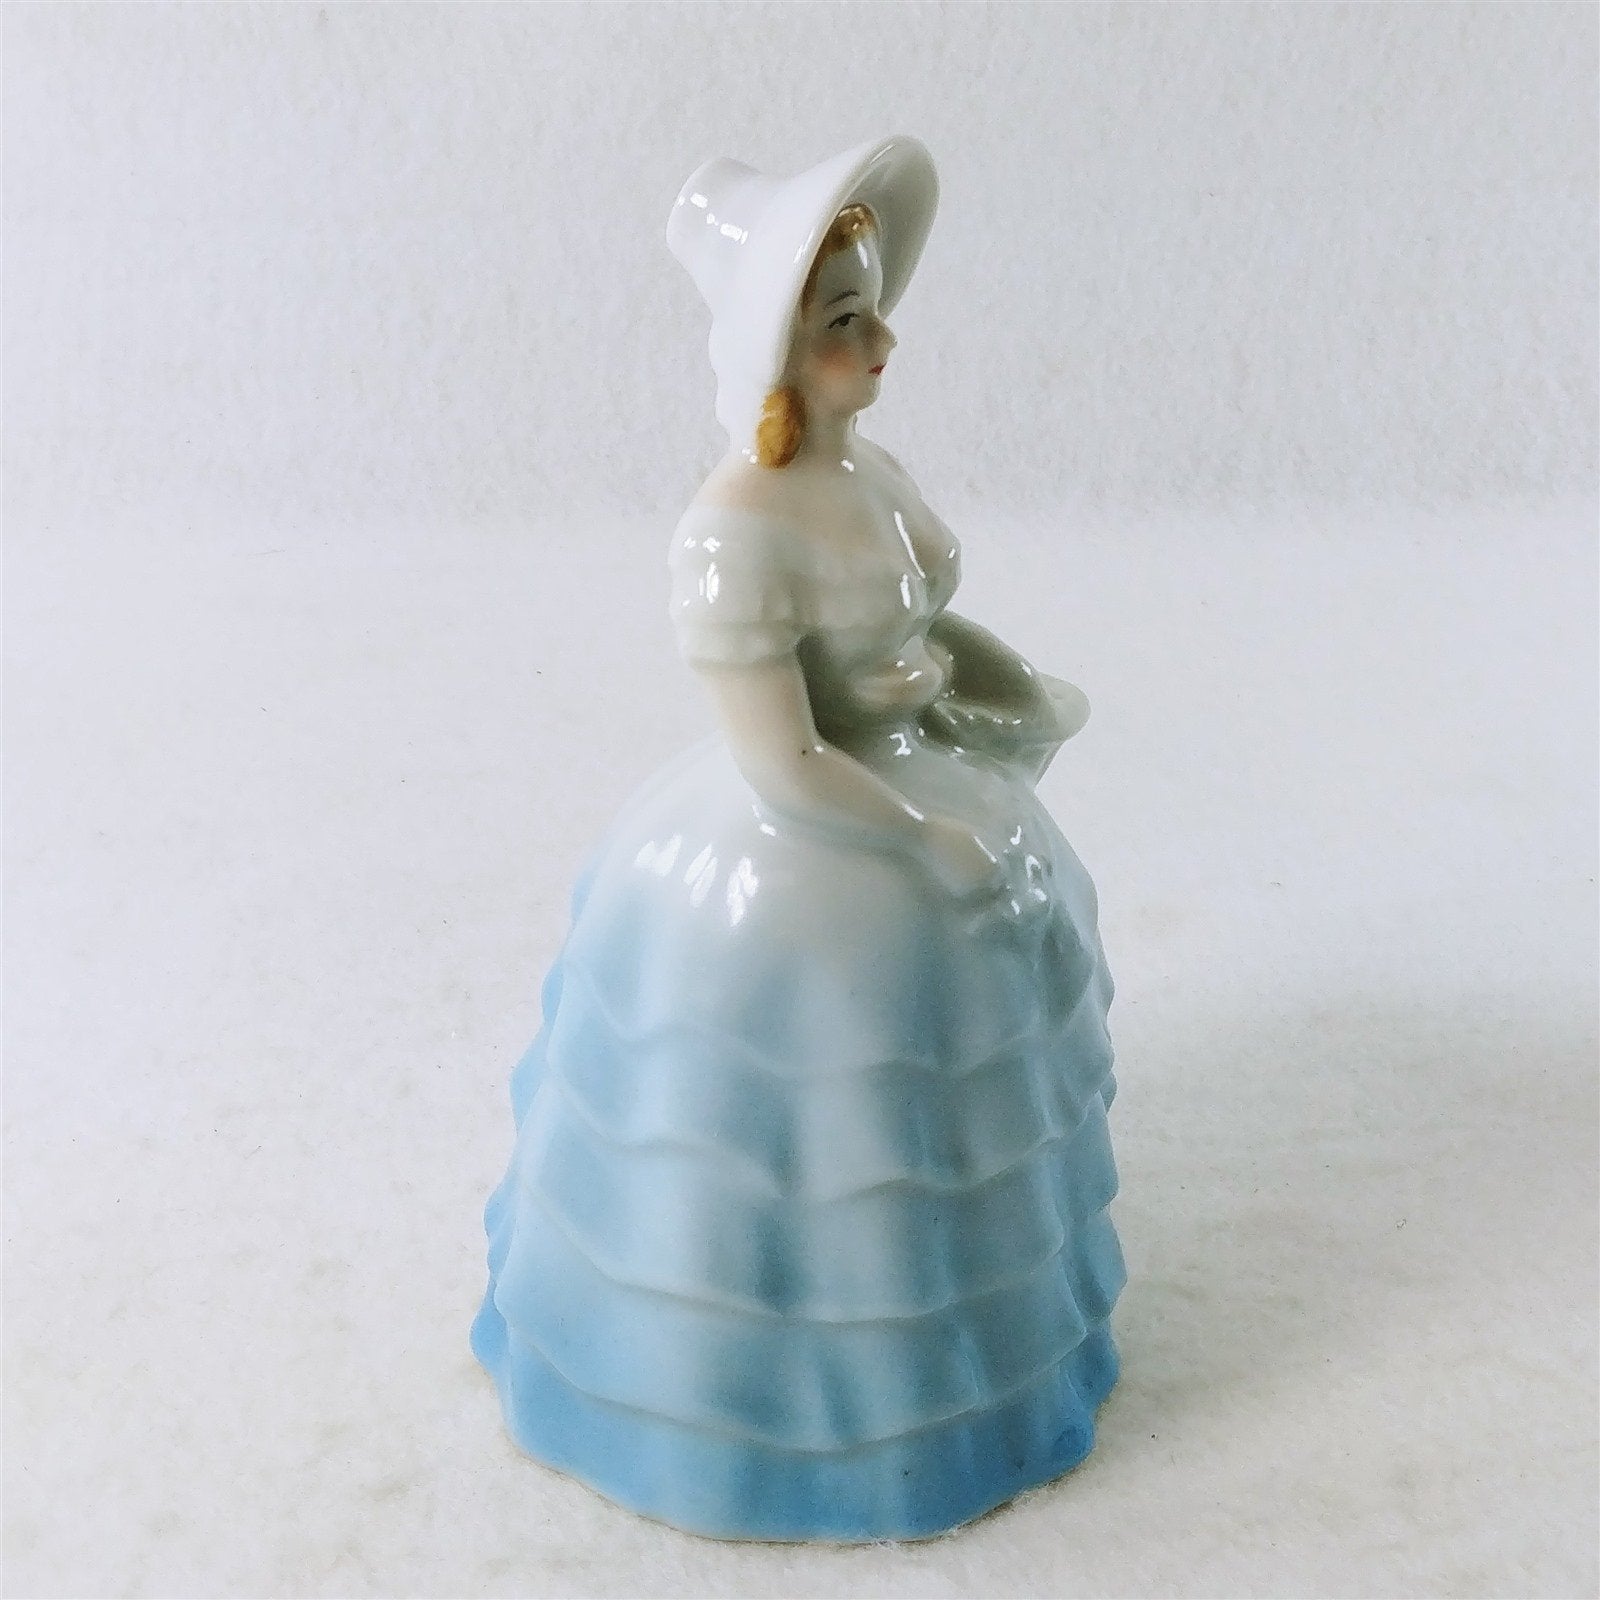 Planter Lady Female Figurine in Dress Hat Ceramic 7"